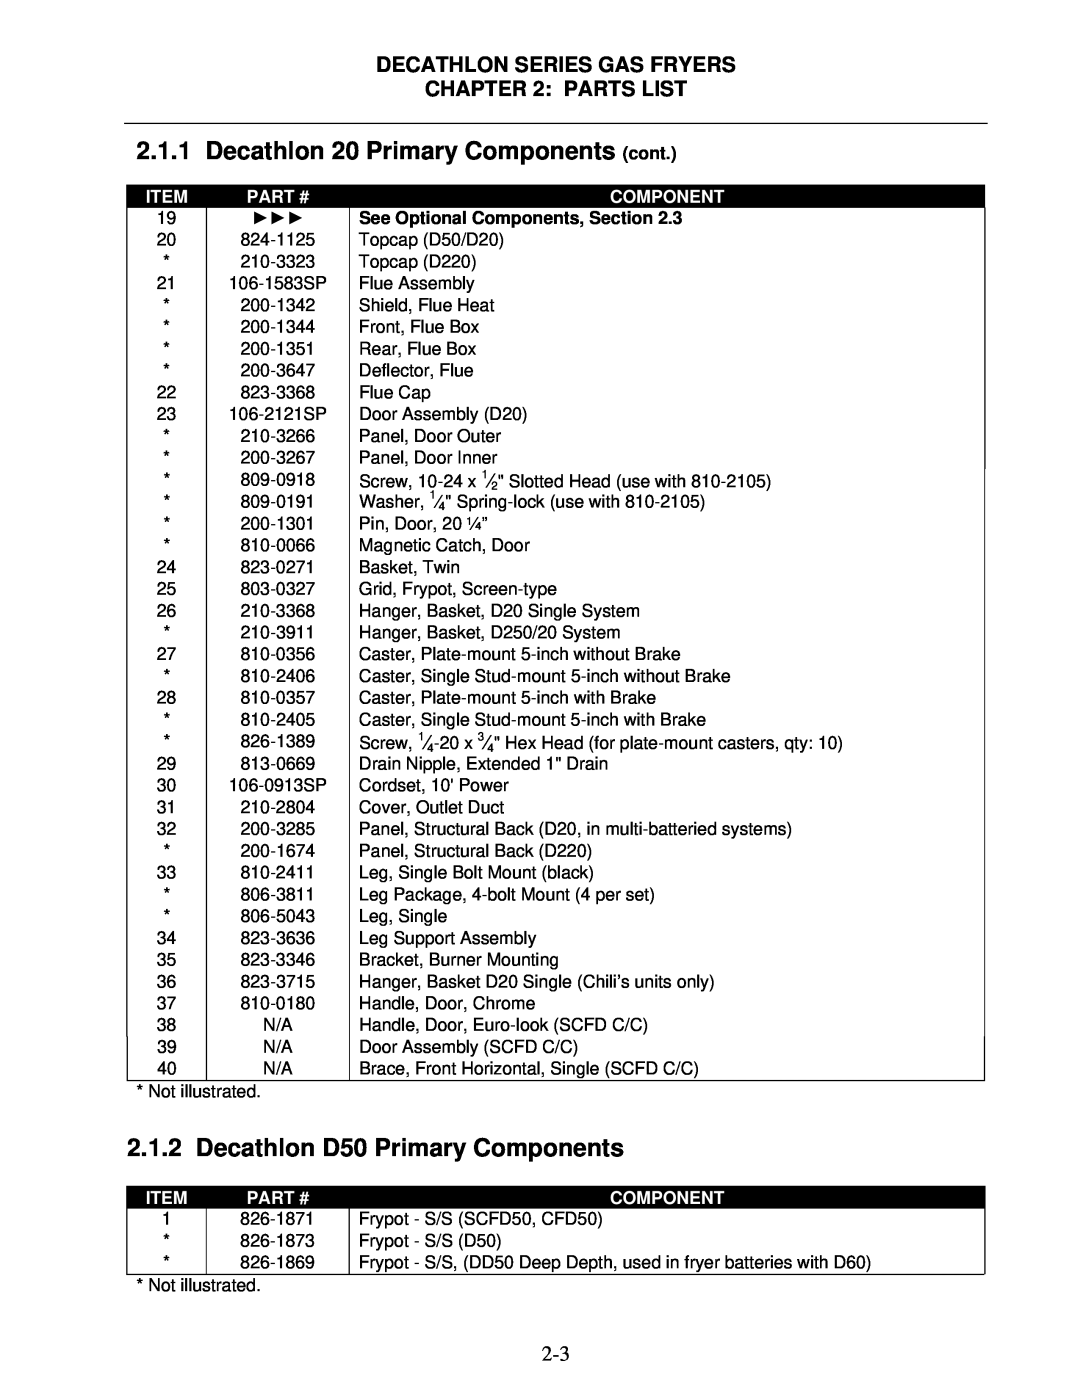 Frymaster SCFD, FPD manual Decathlon 20 Primary Components cont, Decathlon D50 Primary Components, Item, Part #, 826-1871 